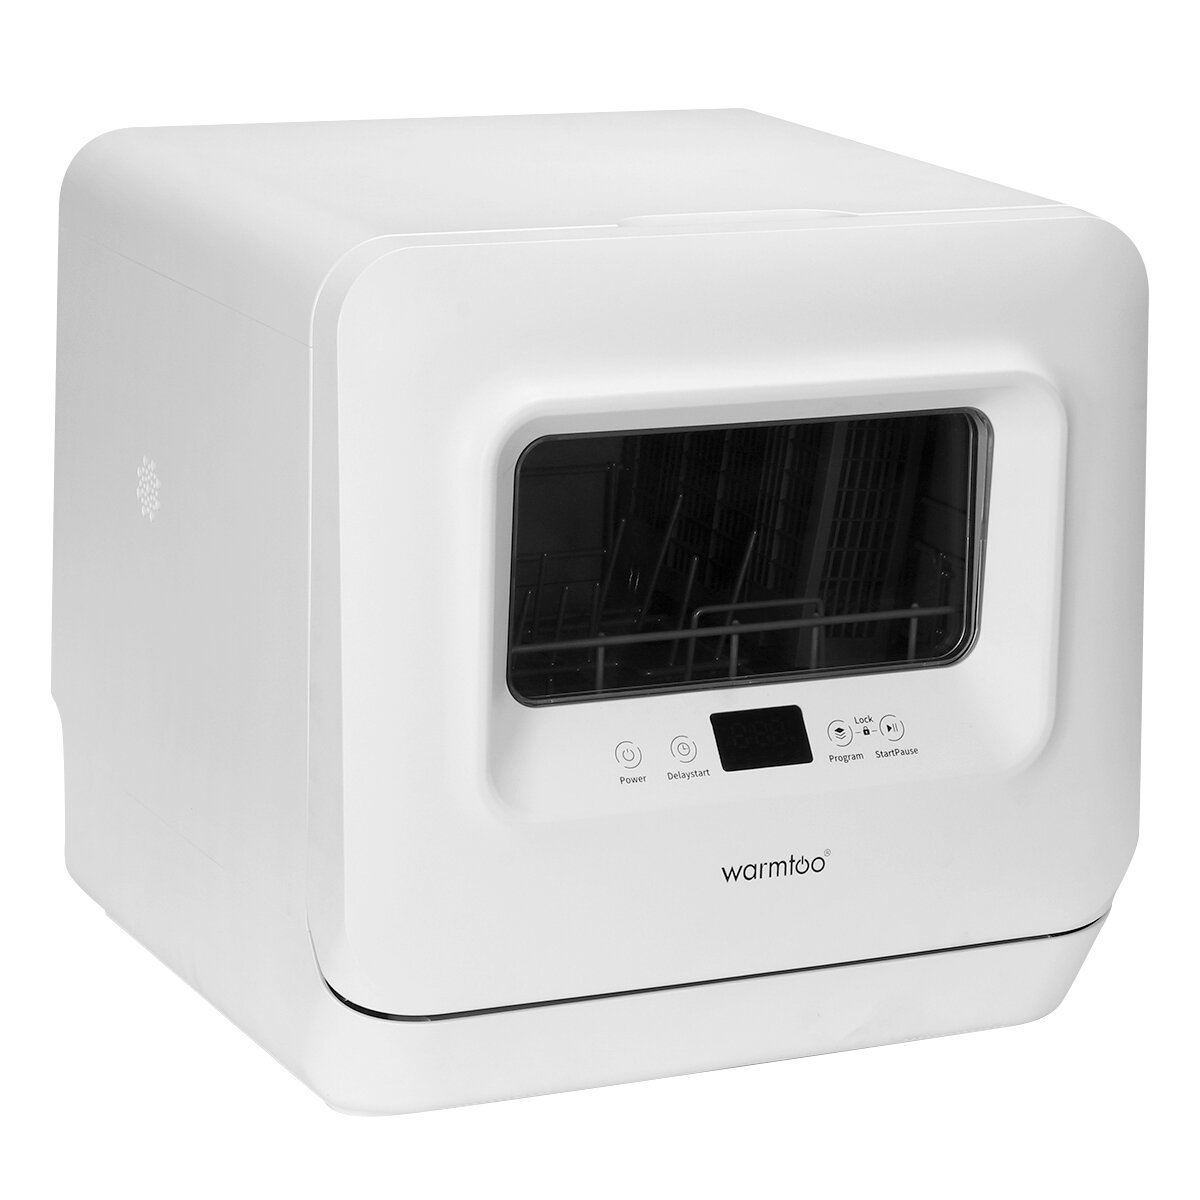 Warmtoo WQP4-6204 Automatic Countertop Dishwasher 850W 5 Washing Programs 2/3 Place Setting